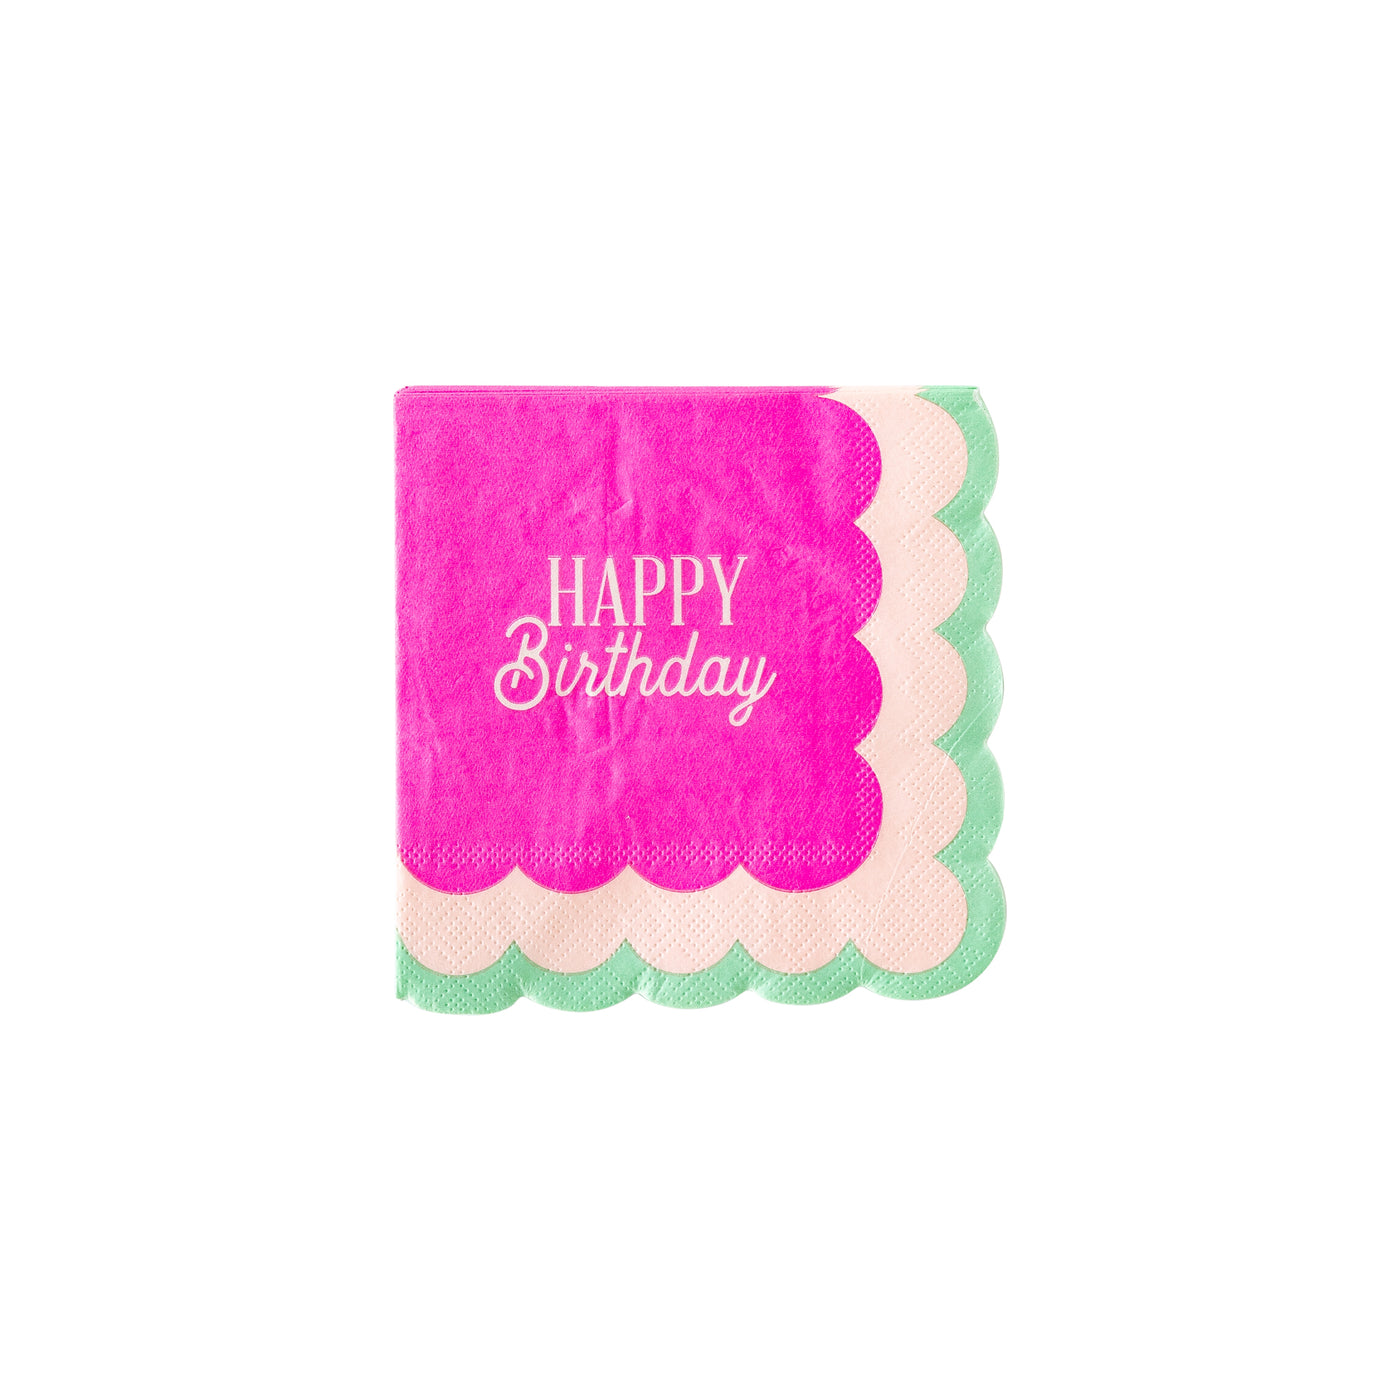 HBD938 - Pink Happy Birthday Cocktail Napkin